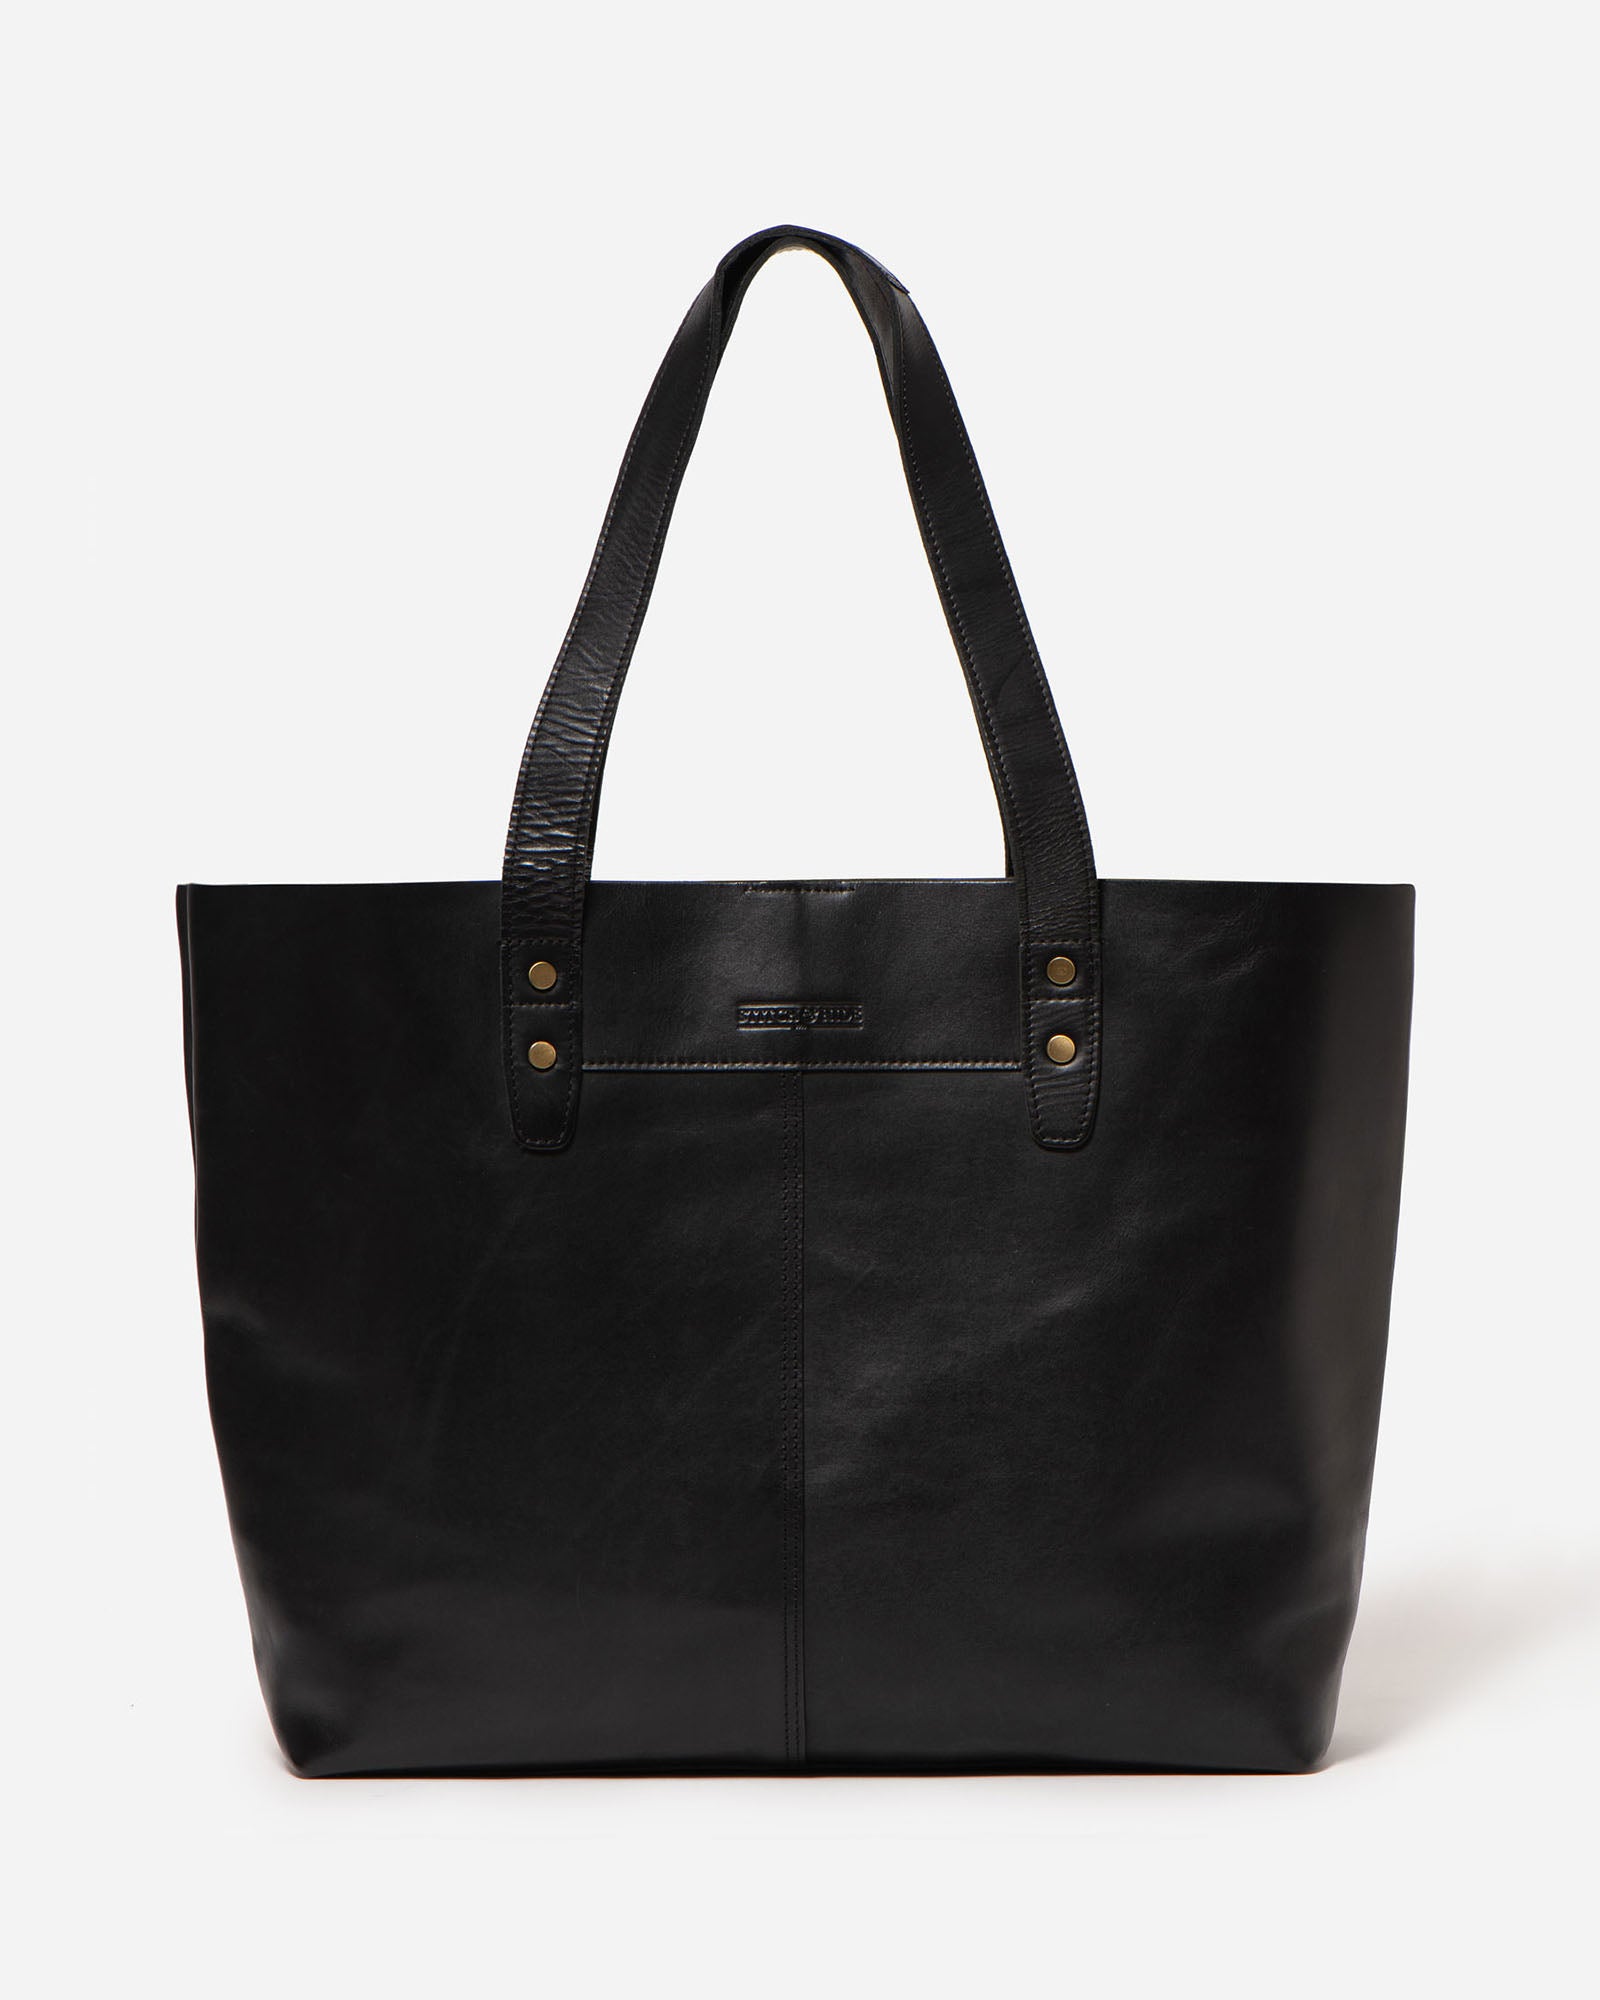 Emma Tote Bag - Premium Leather Tote Bag by Stitch & Hide